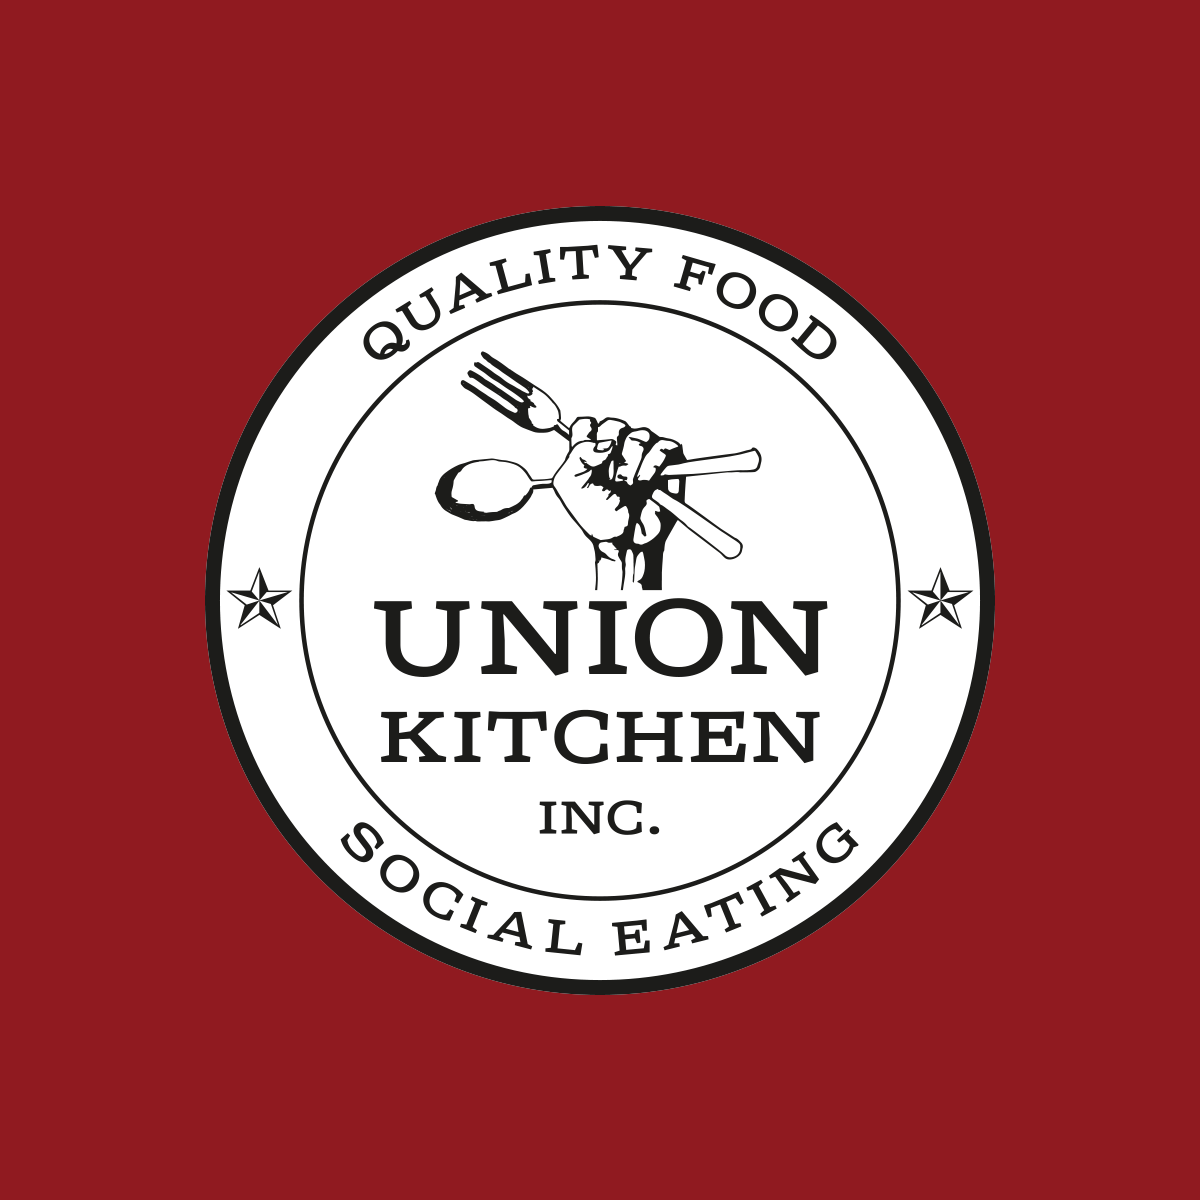 Union Kitchen in Summerland BC logo design, graphic design and printing